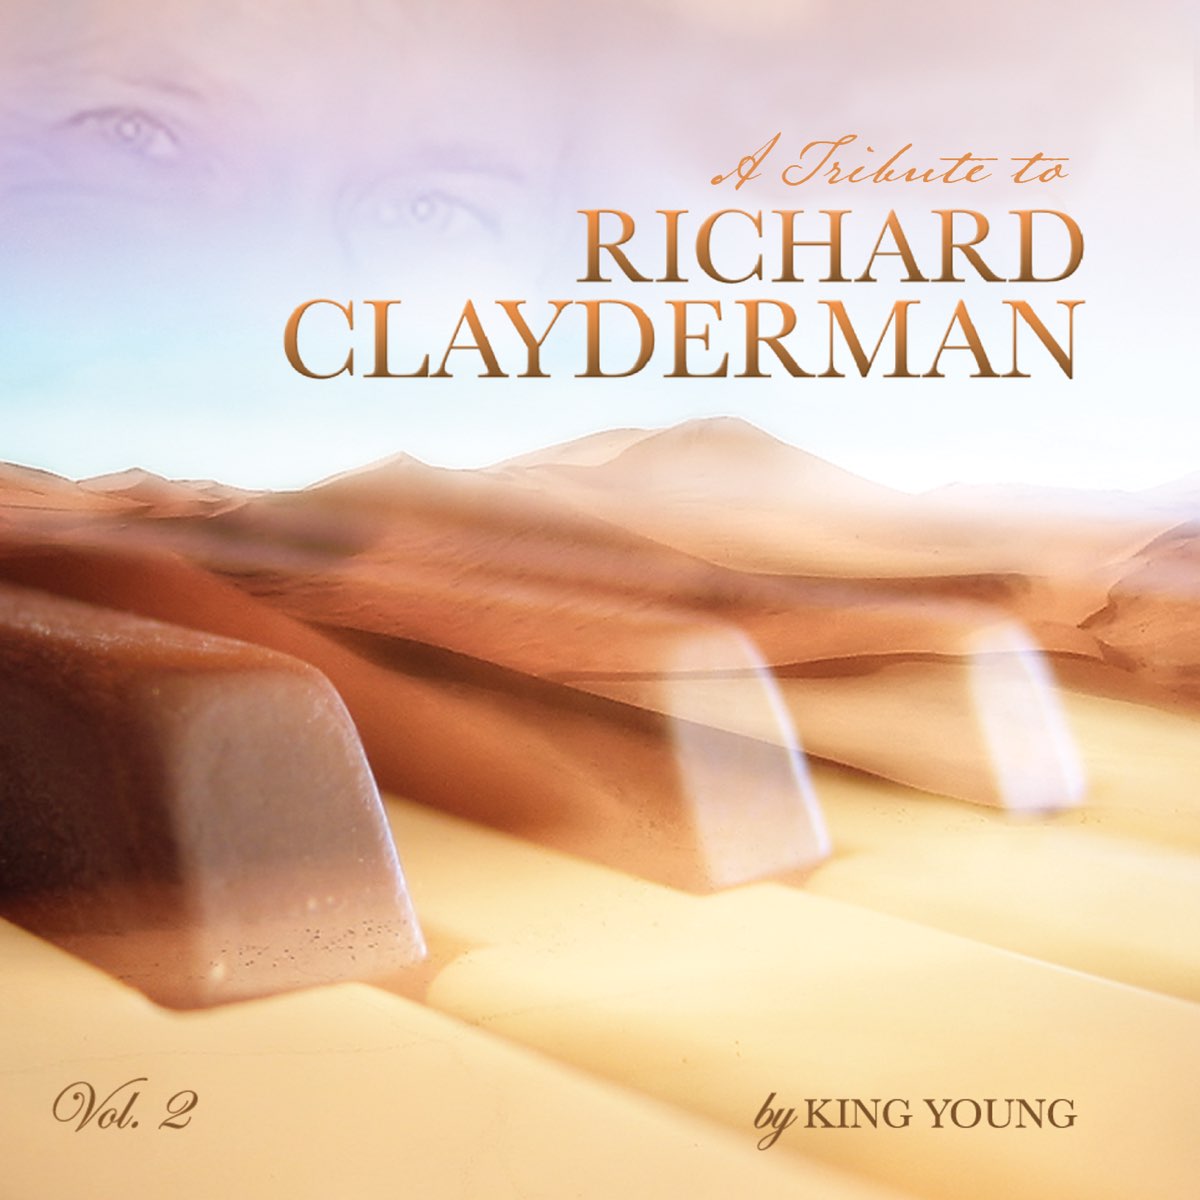 Richard Clayderman -- 1993 - when a man Loves a woman. Feeling king